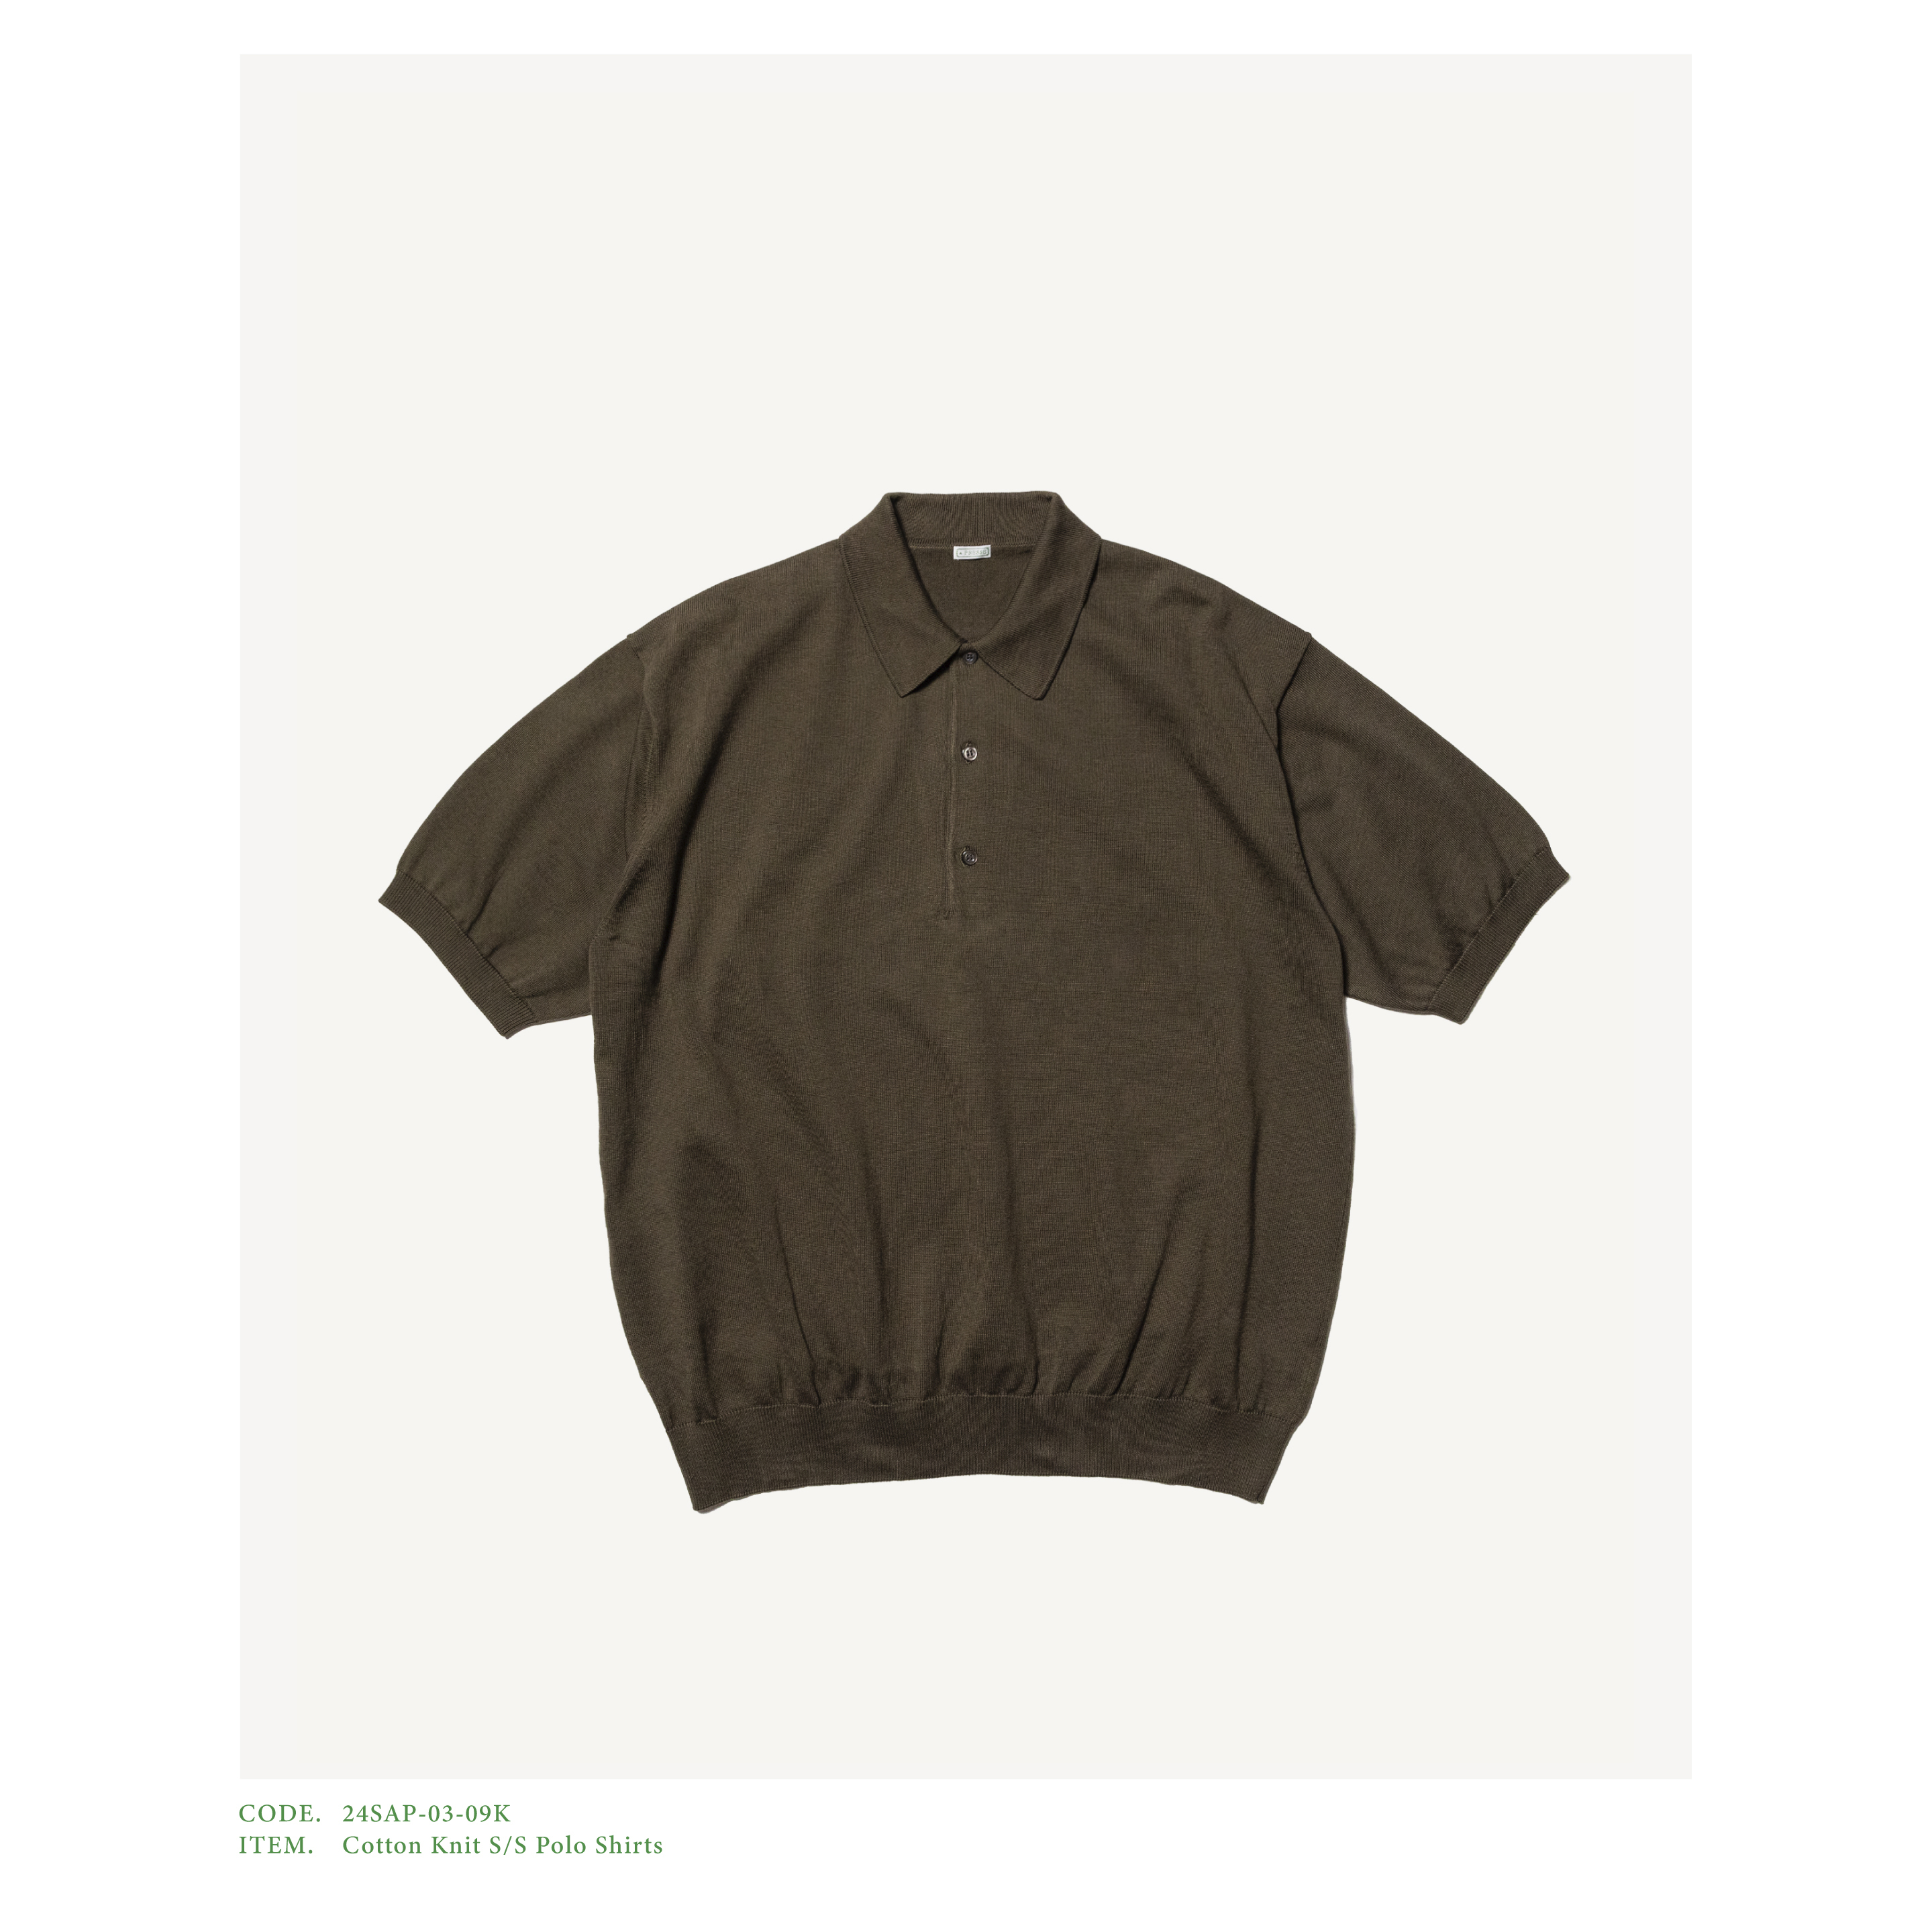 (24ss) A.PRESSE(A vbZ)/ Cotton Knit S/S Polo Shirts -NAVY,OLIVE- #24SAP-03-09K(2)